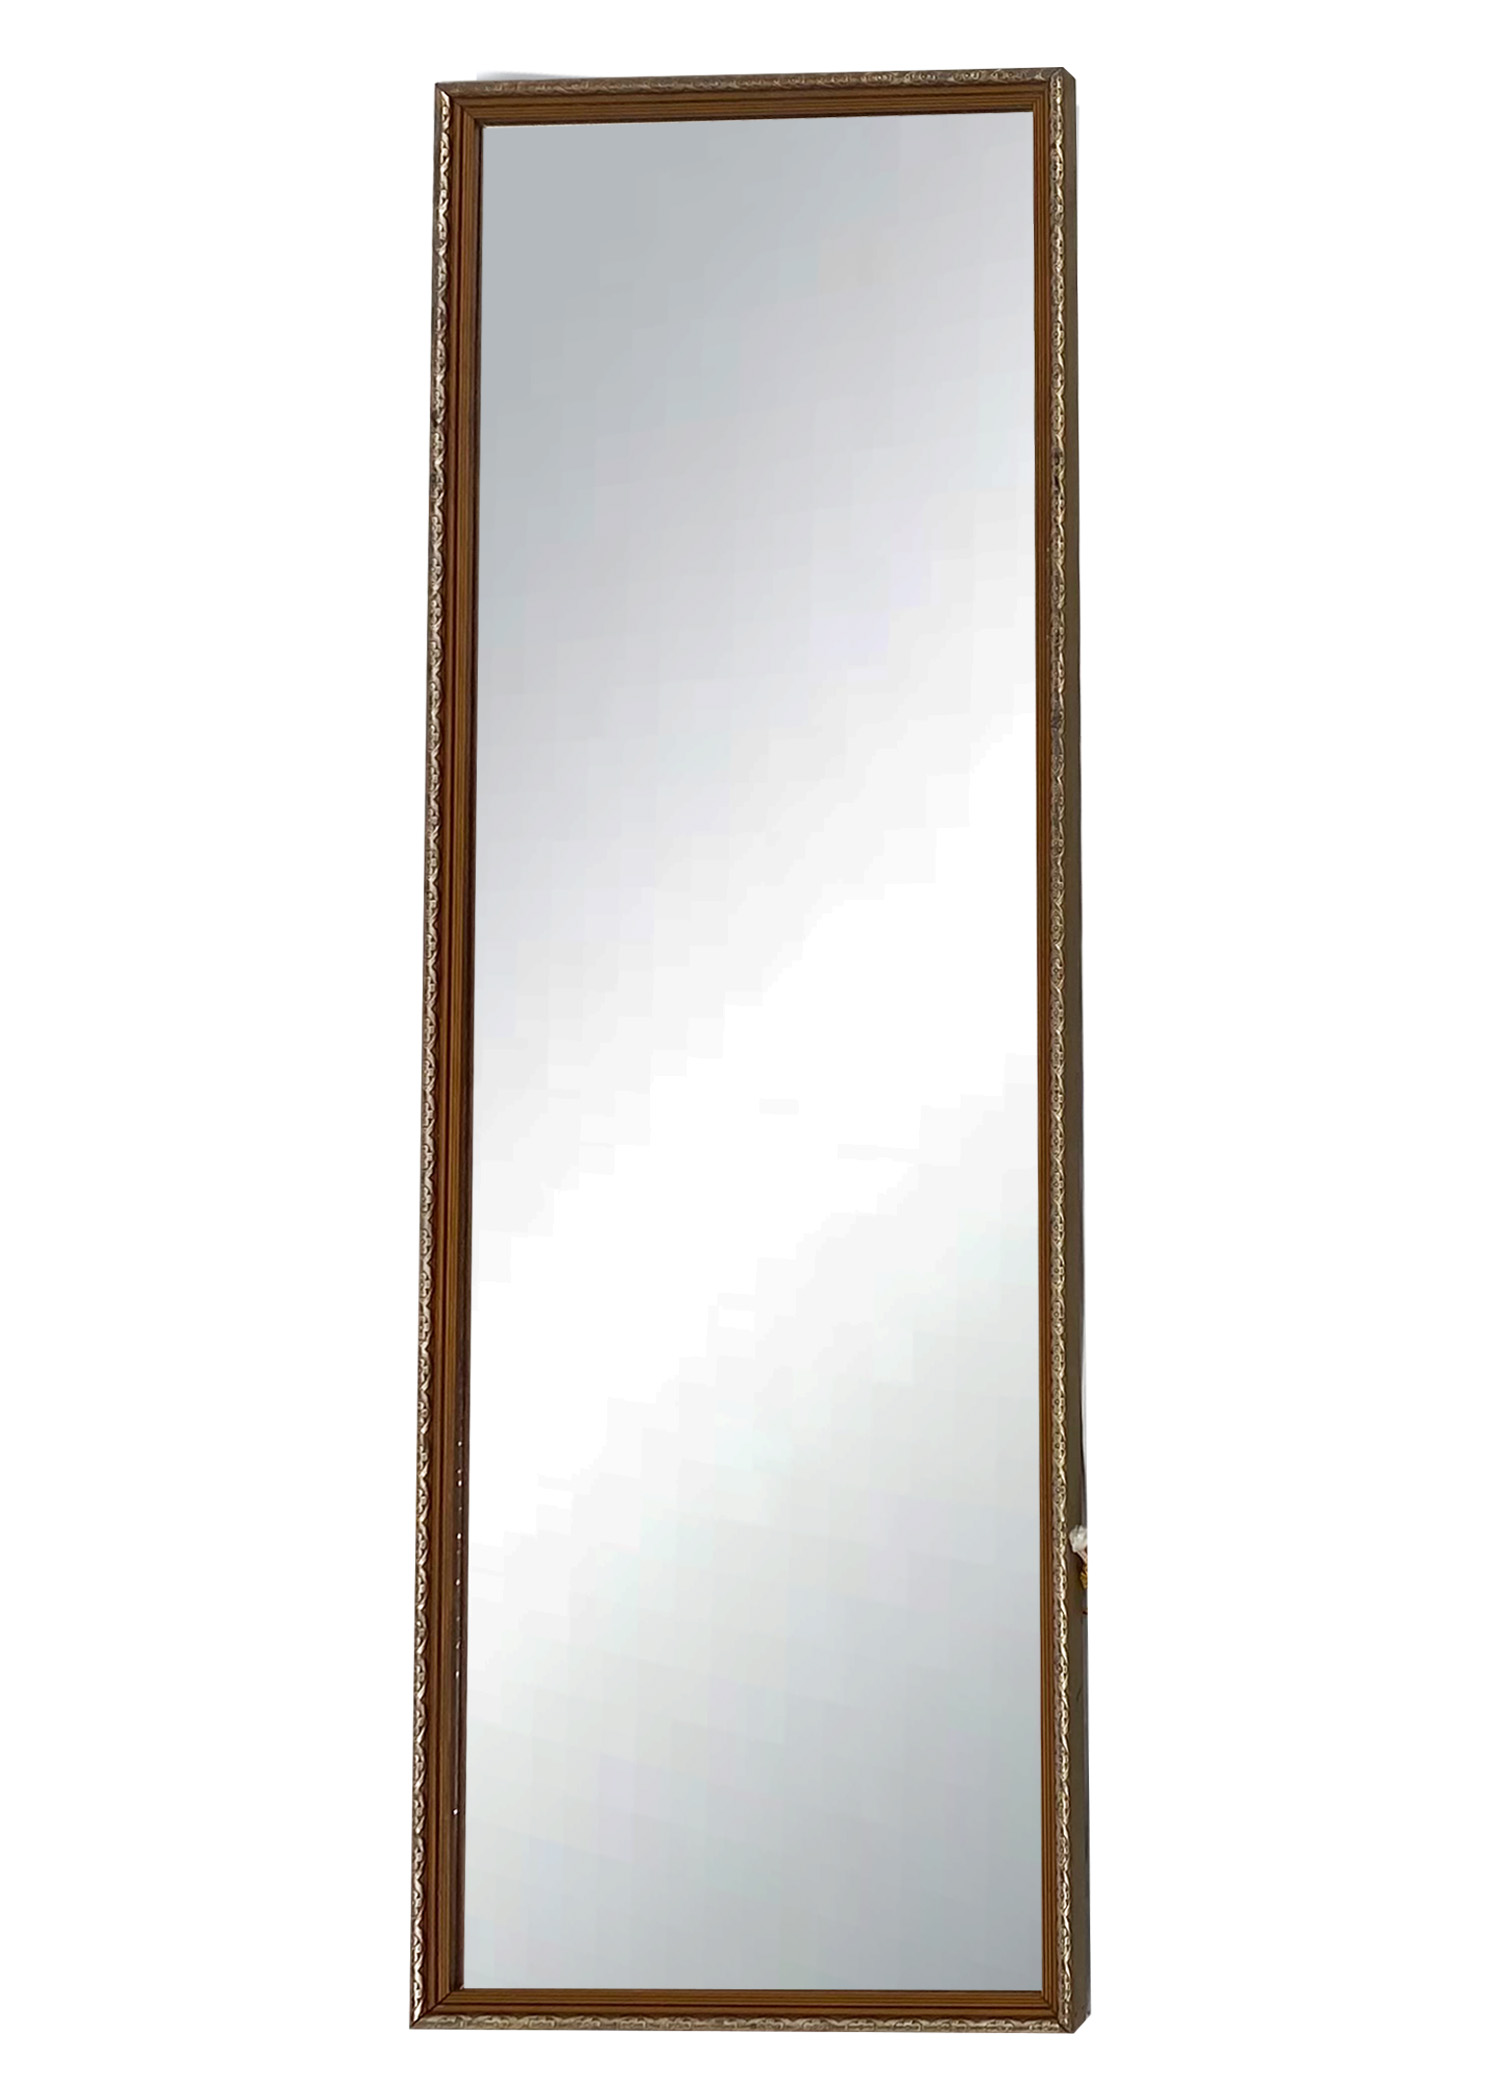 Mirror #28 Rectangular Gold Frame (H: 1.1m x W: 0.35m)